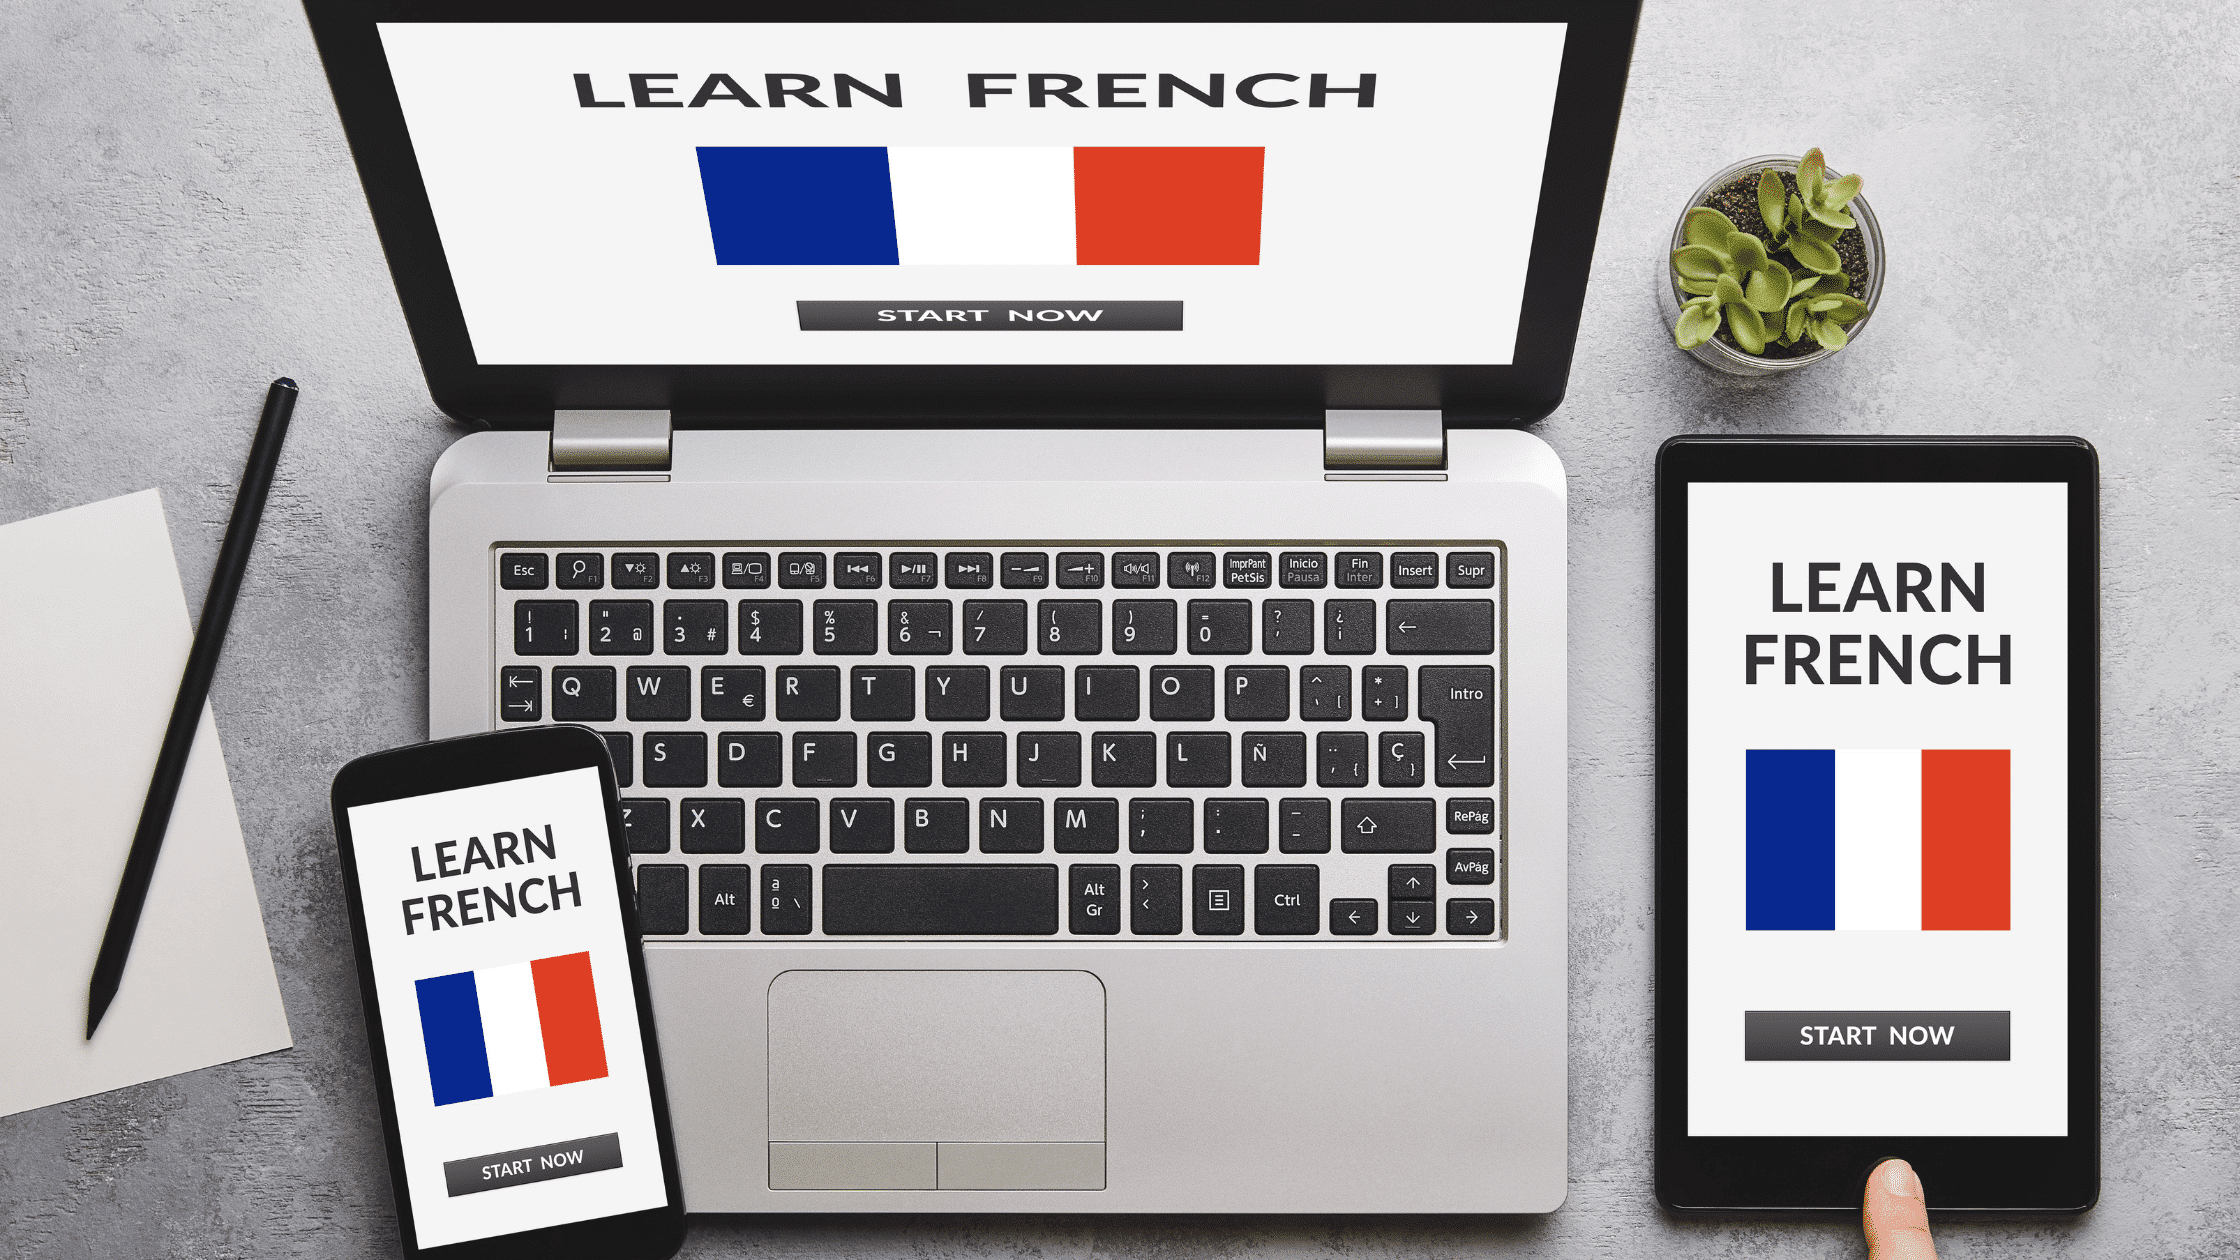 Elementary French Grammar Topics